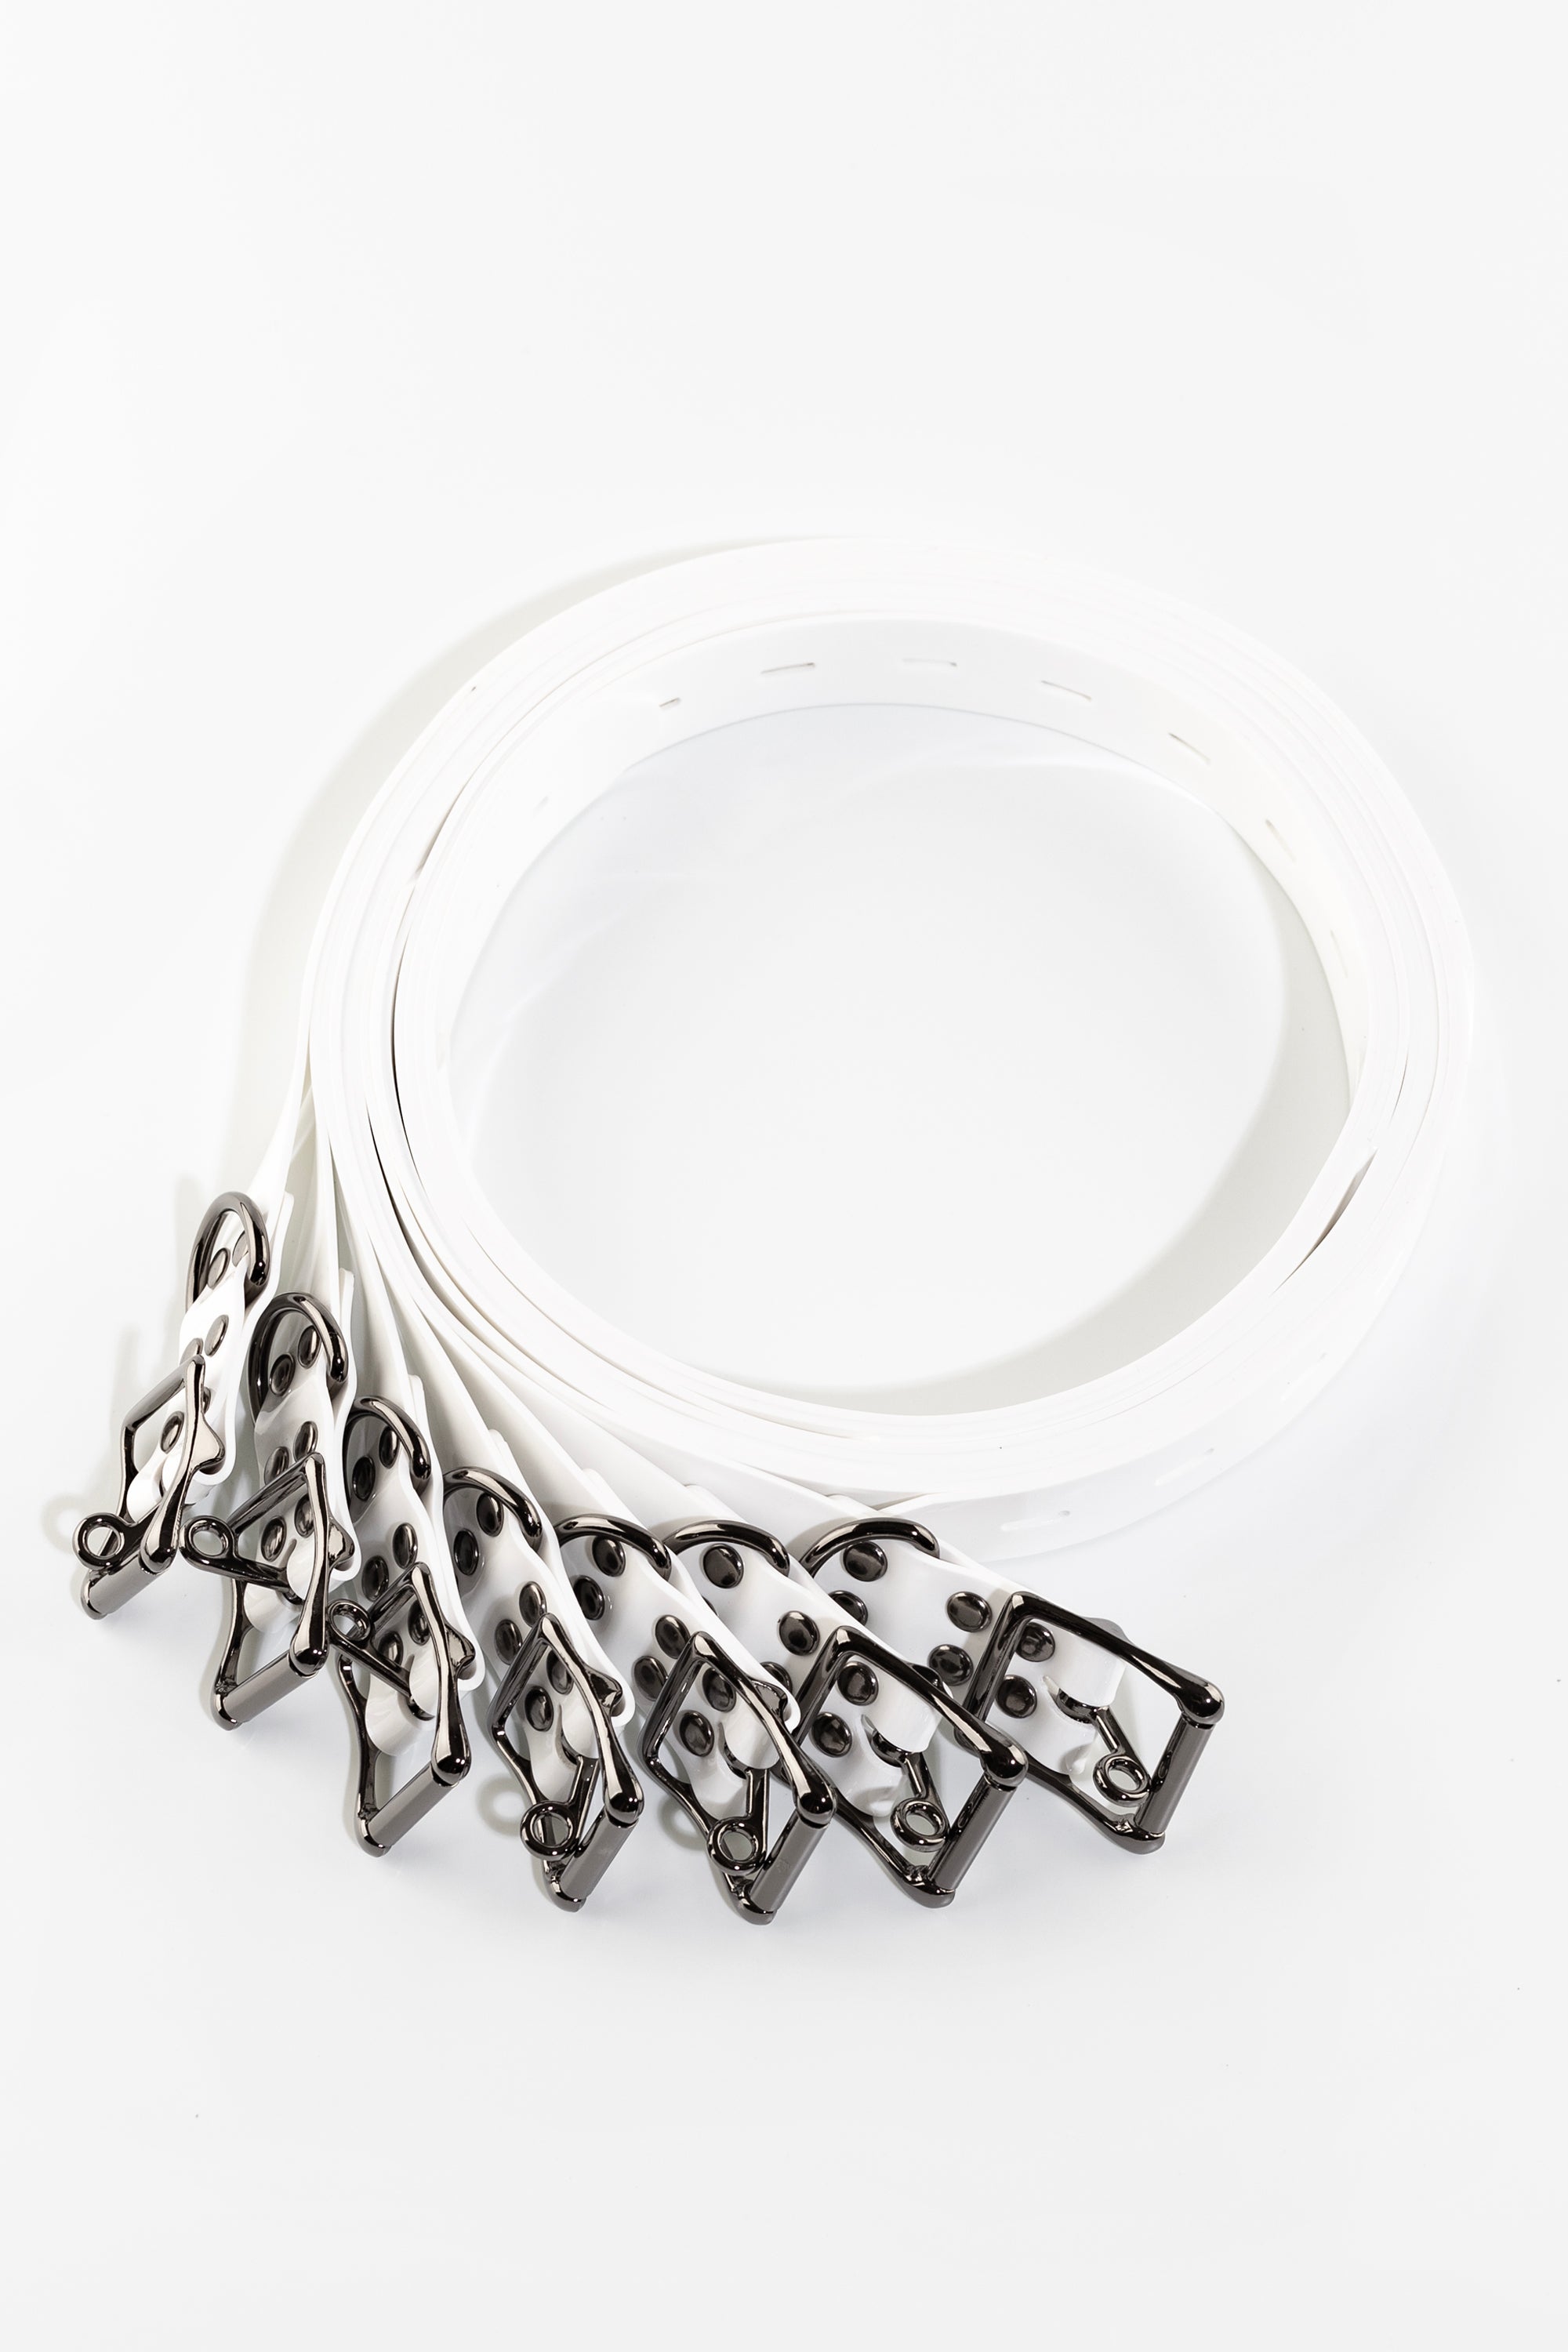 Bondage lockable straps set 25 mm, white/black